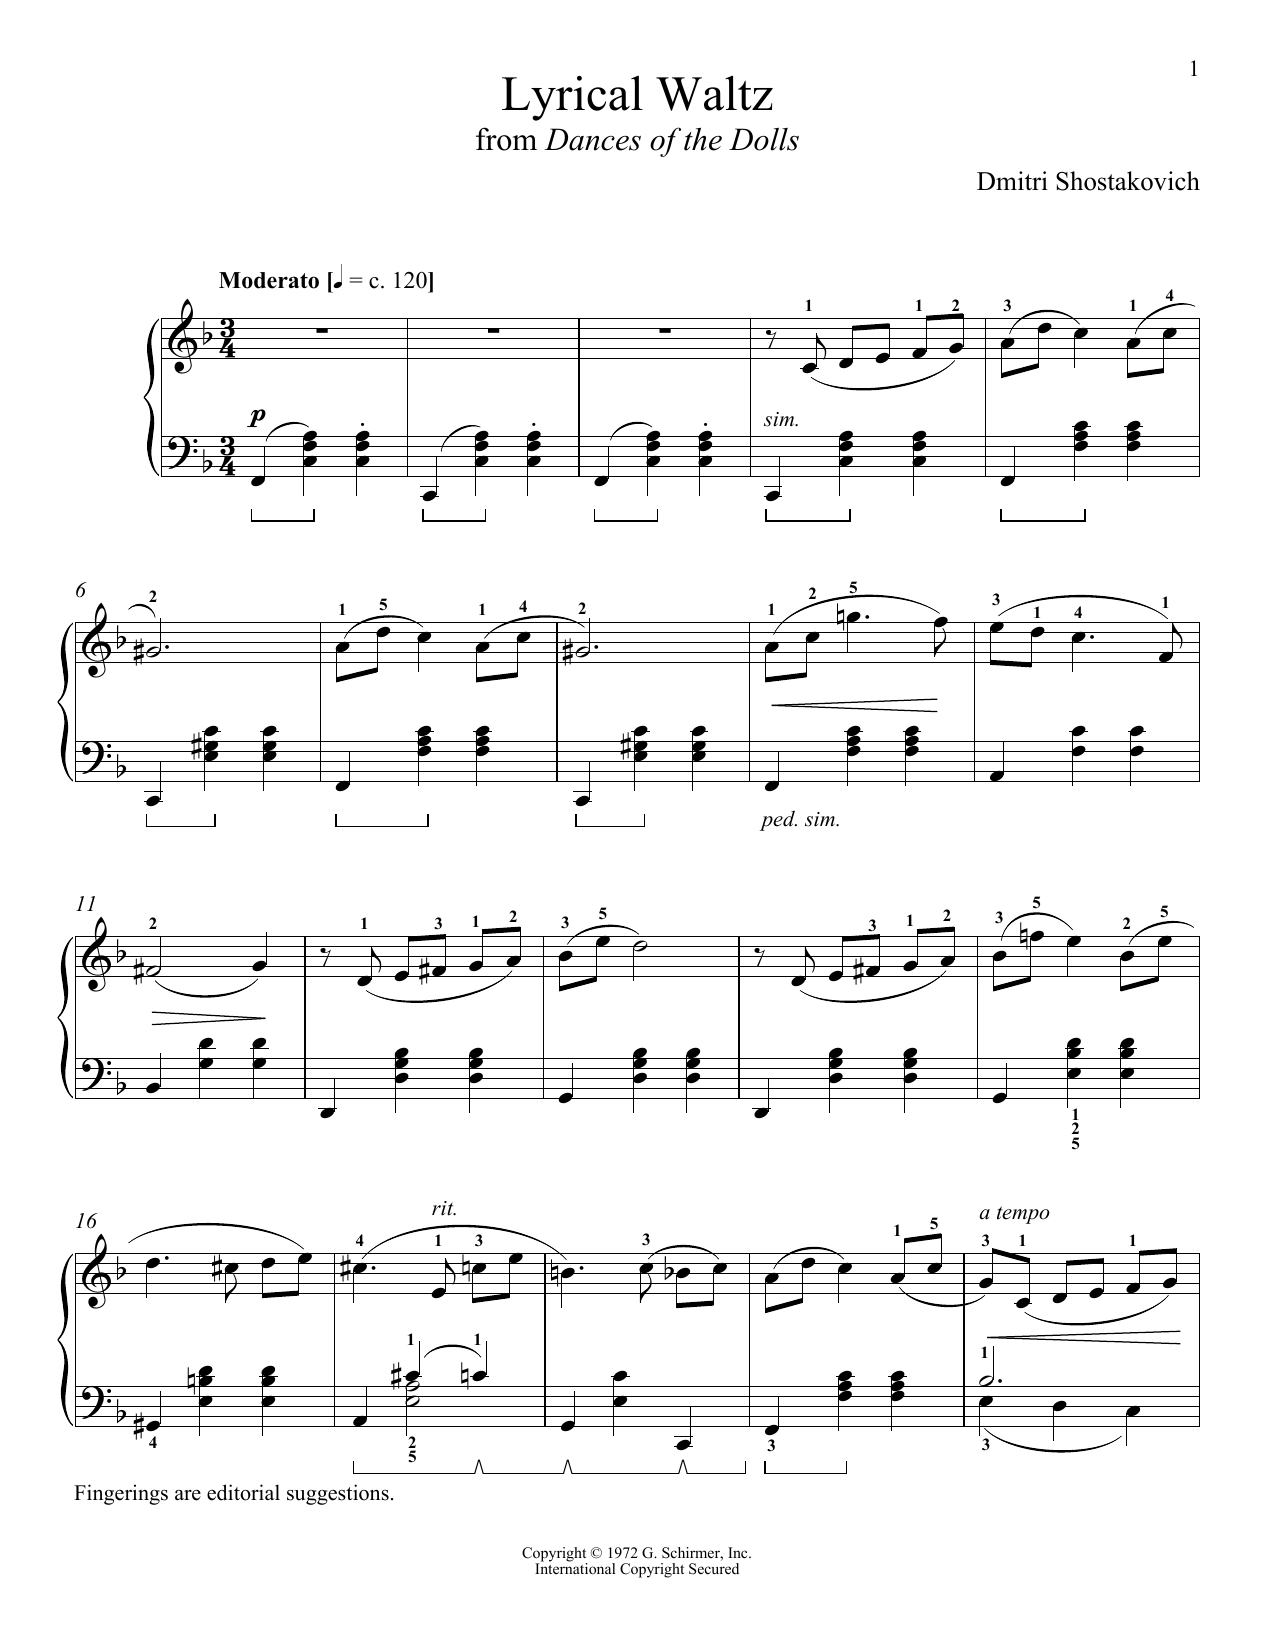 Dmitri Shostakovich Lyrical Waltz Sheet Music Notes & Chords for Piano - Download or Print PDF